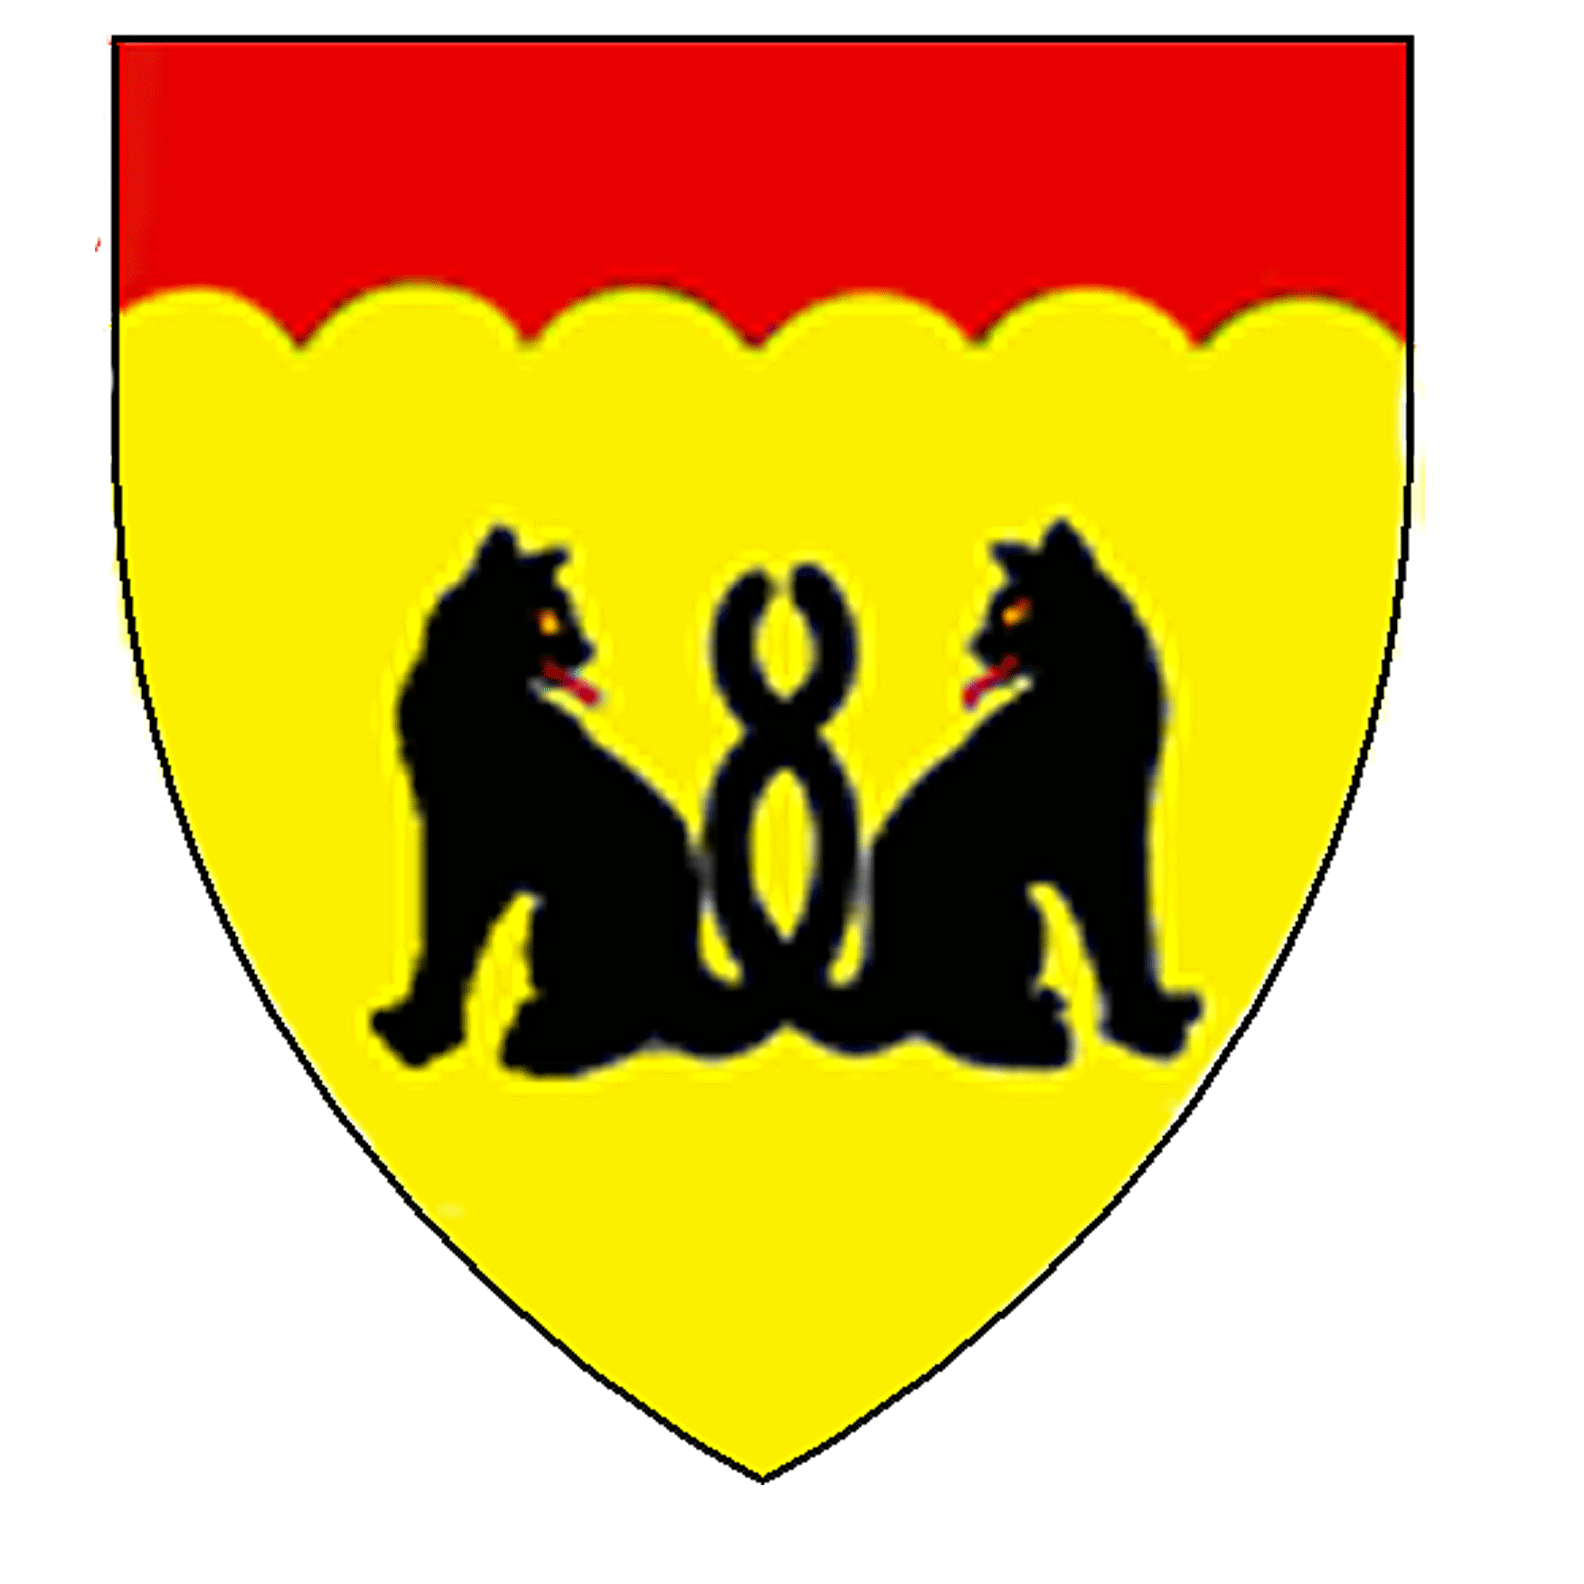 The arms of Adelheit Schwarzenkatze